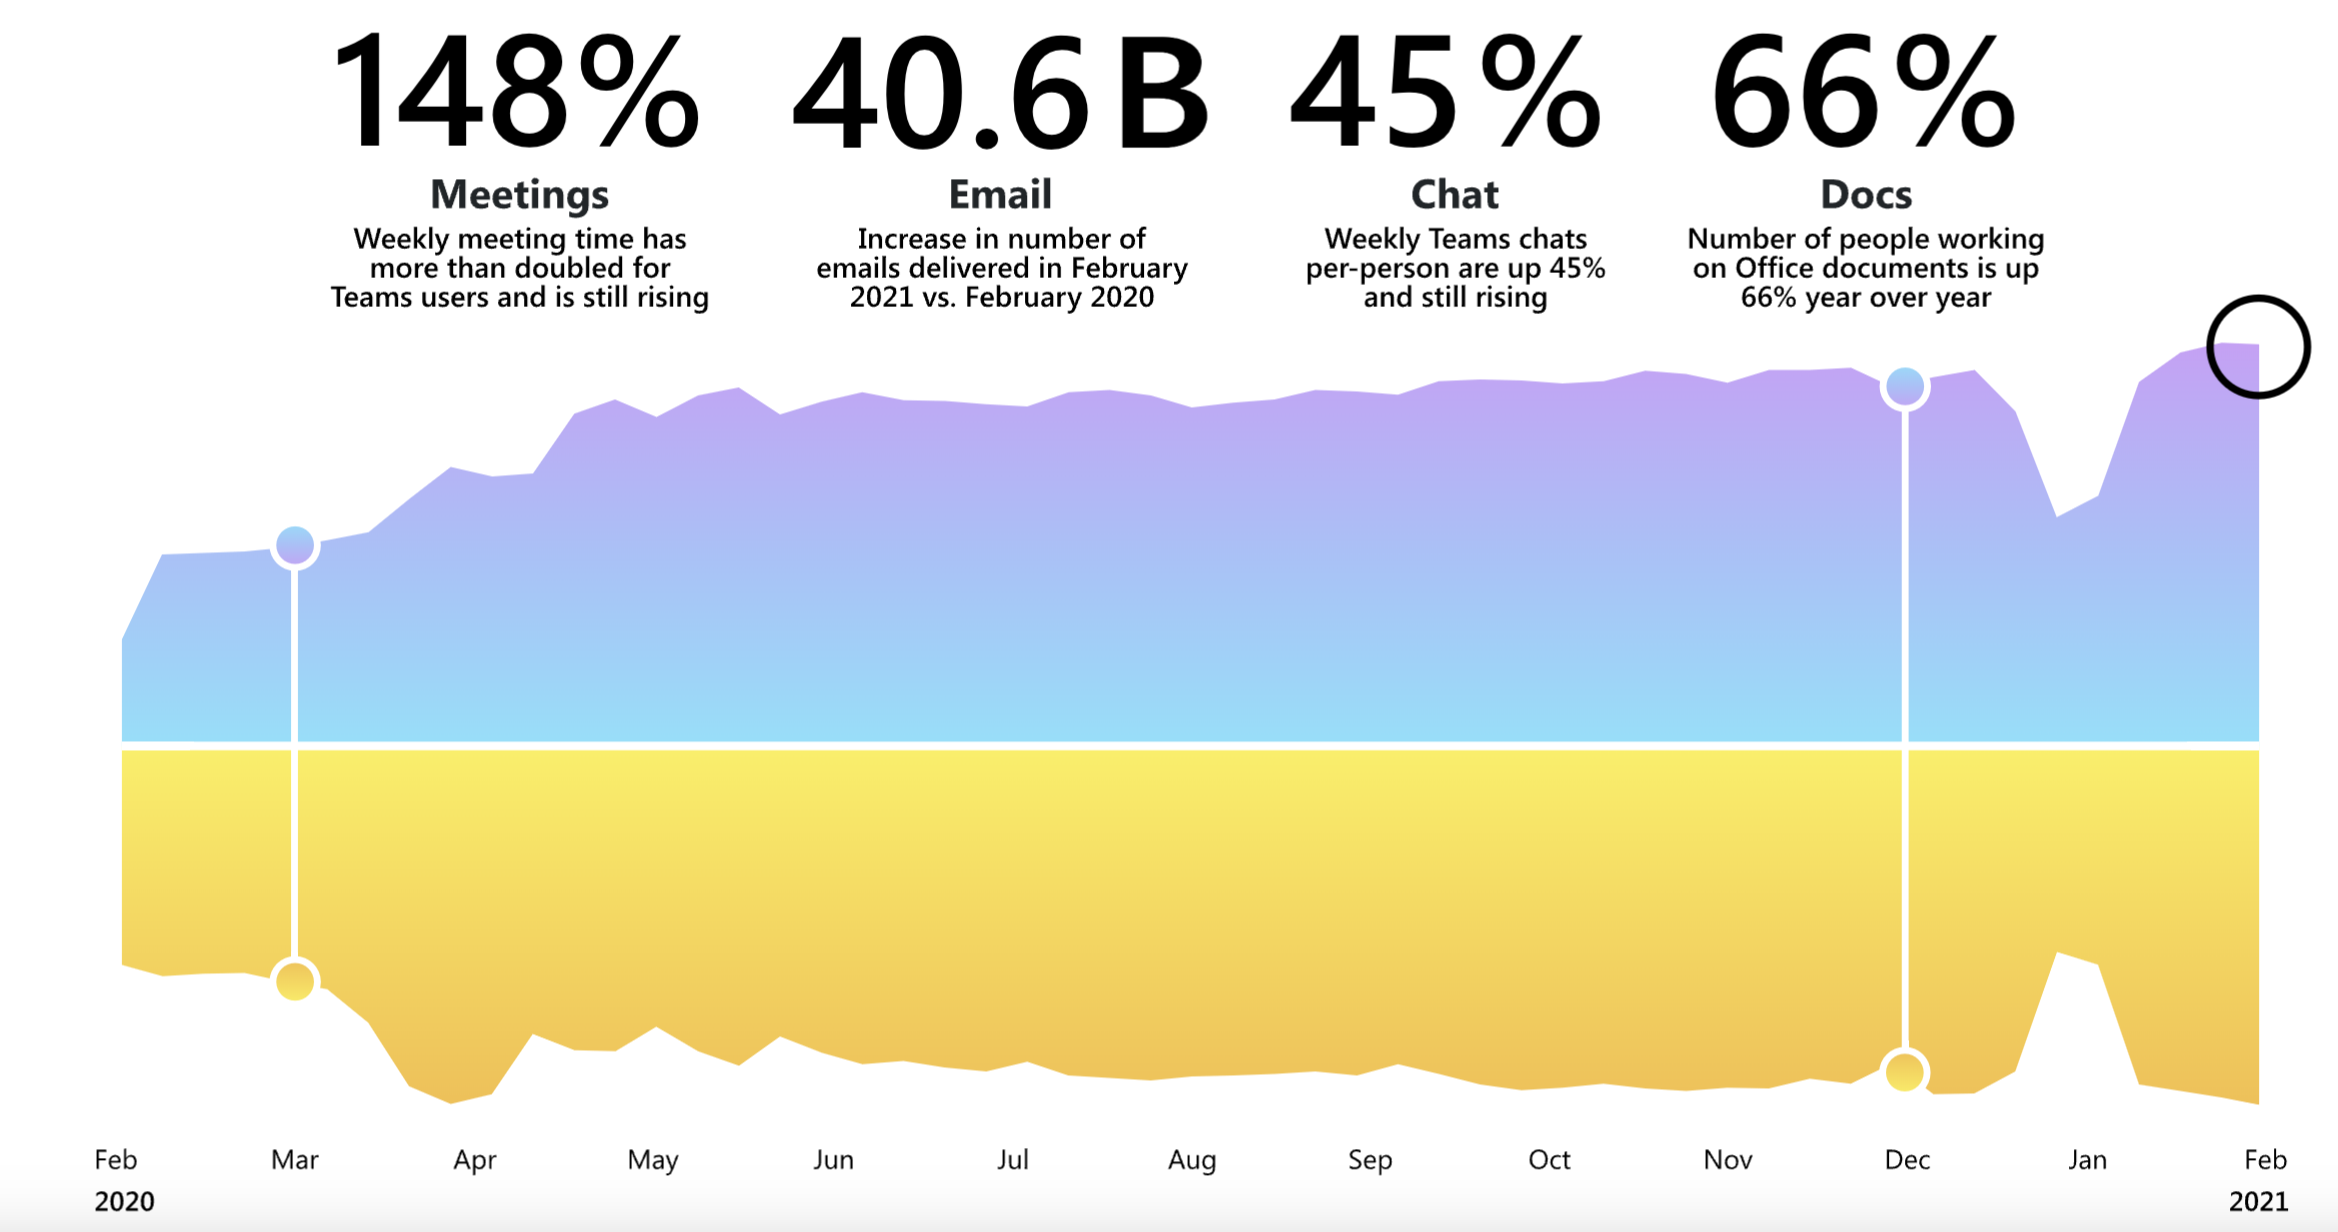 Digital overload stats by Microsoft